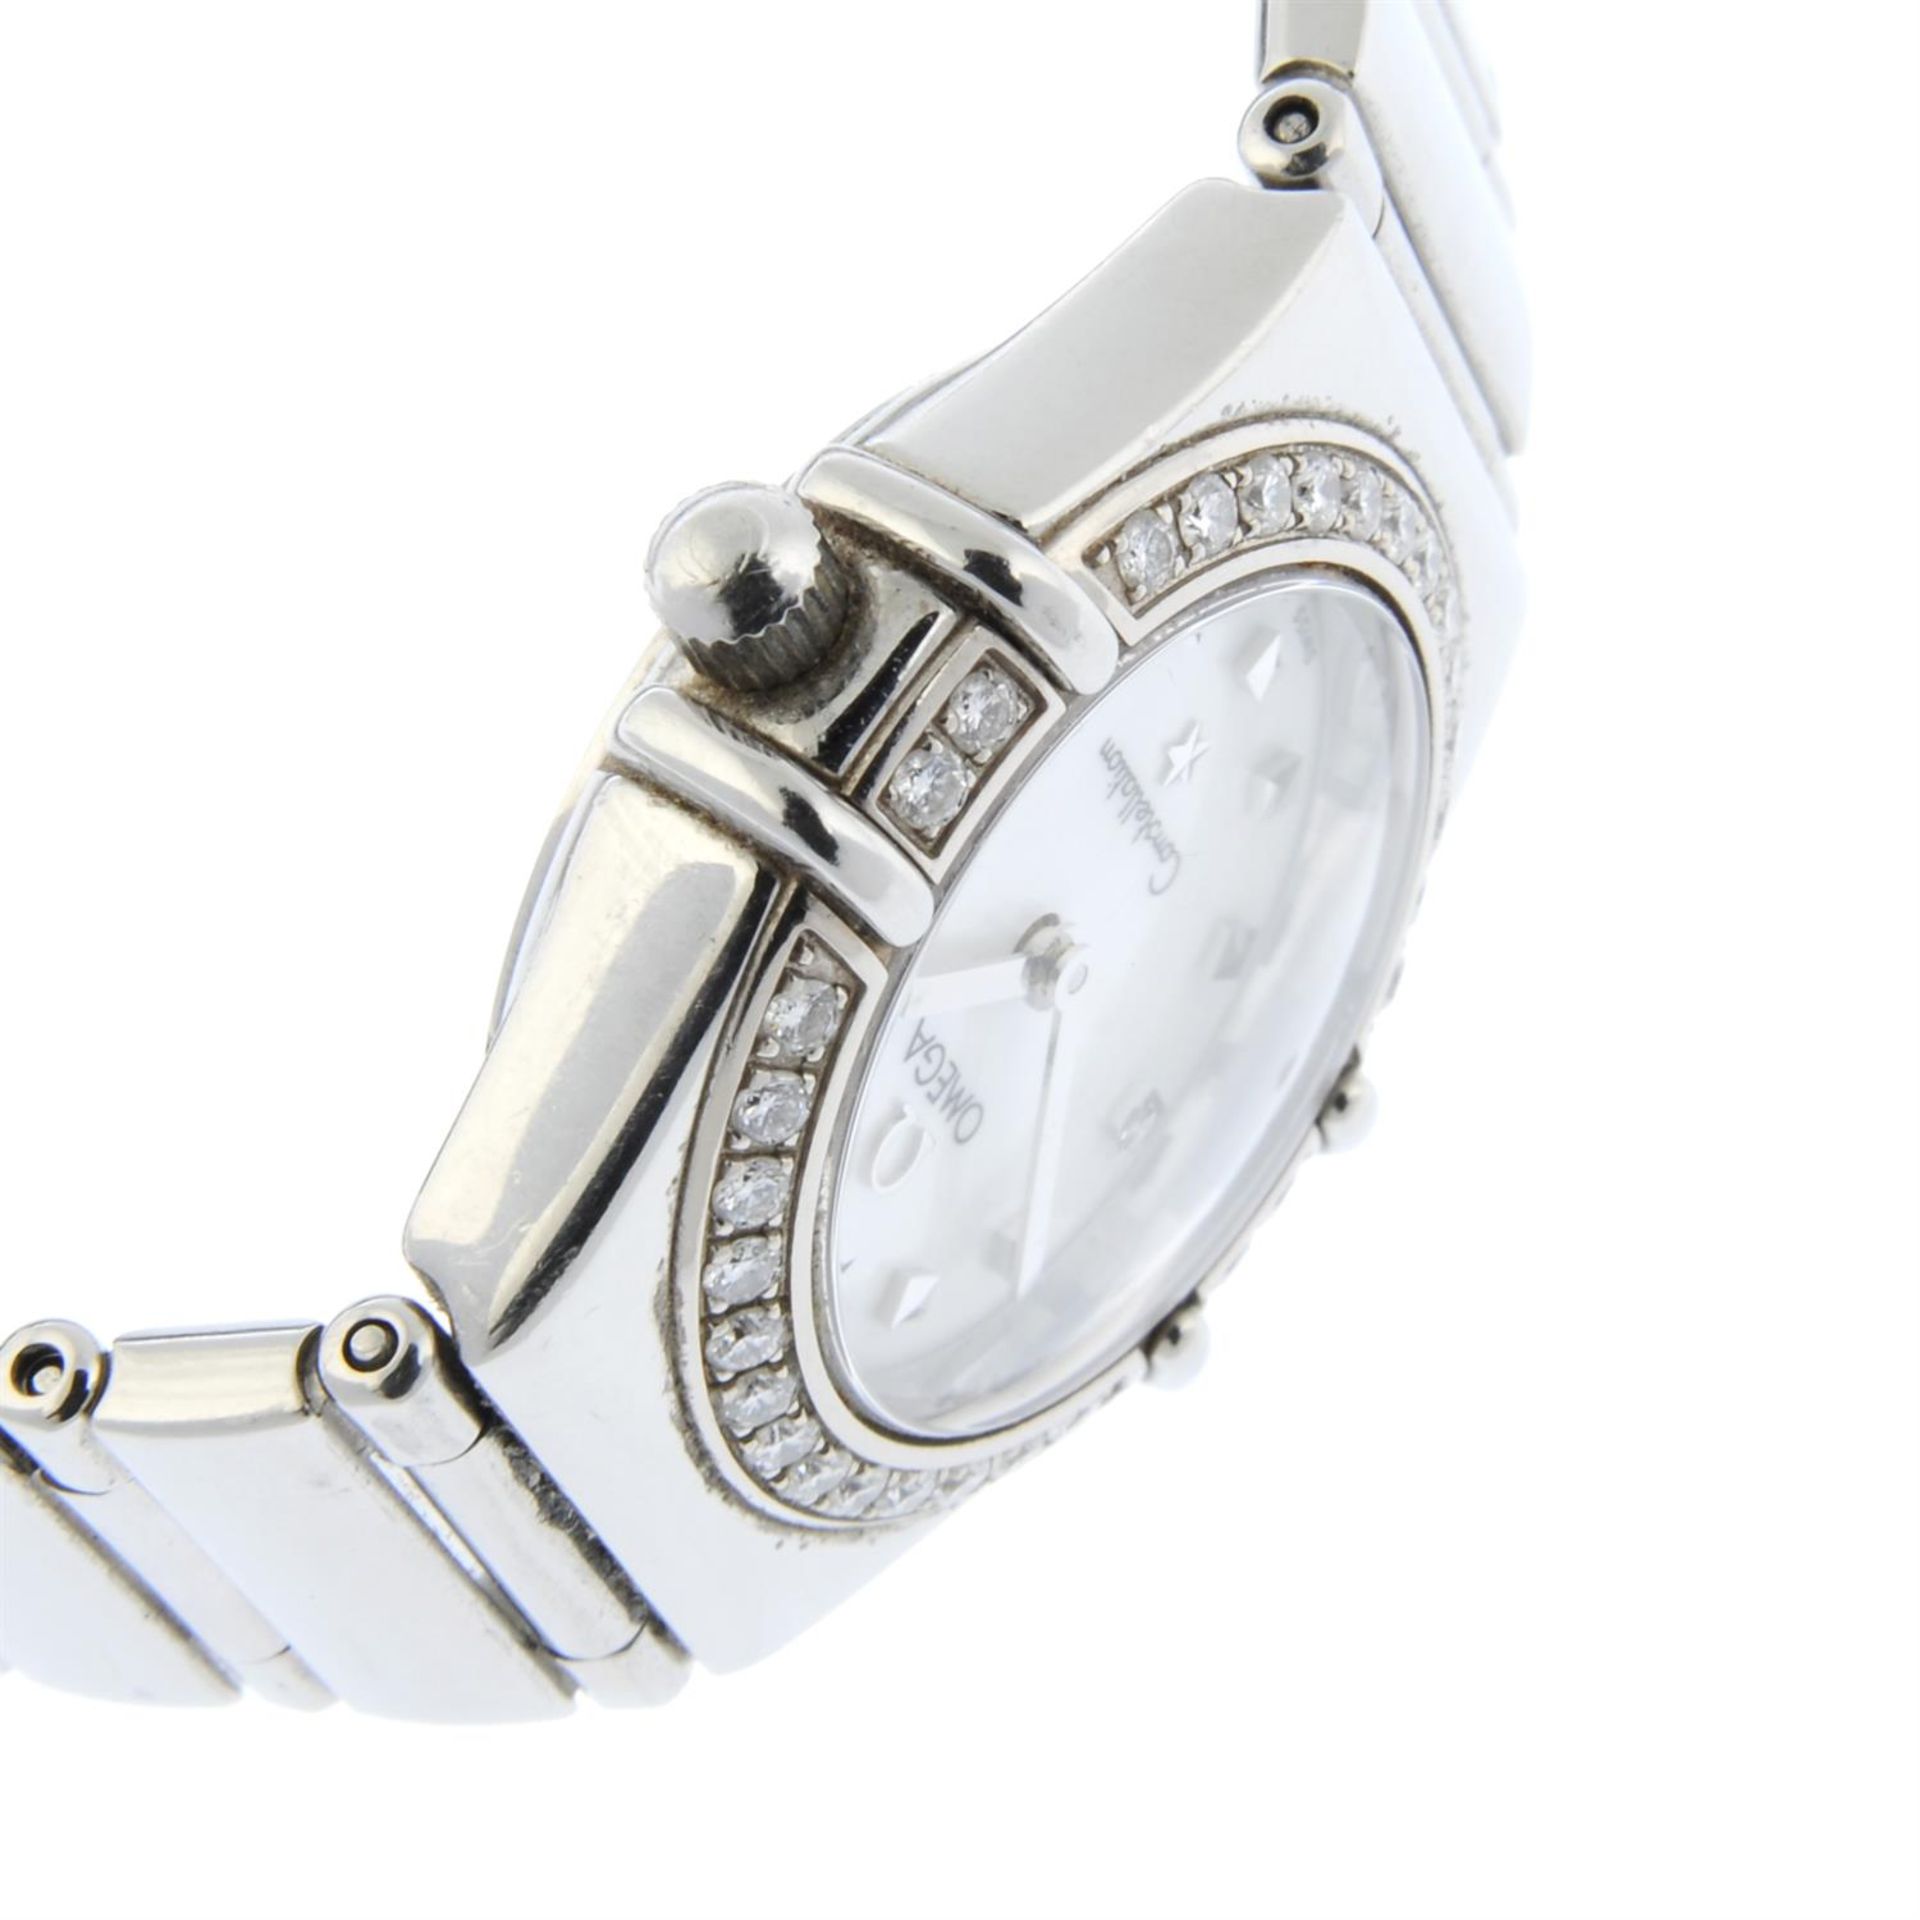 OMEGA - a factory diamond set stainless steel Constellation bracelet watch, 22mm. - Bild 3 aus 4